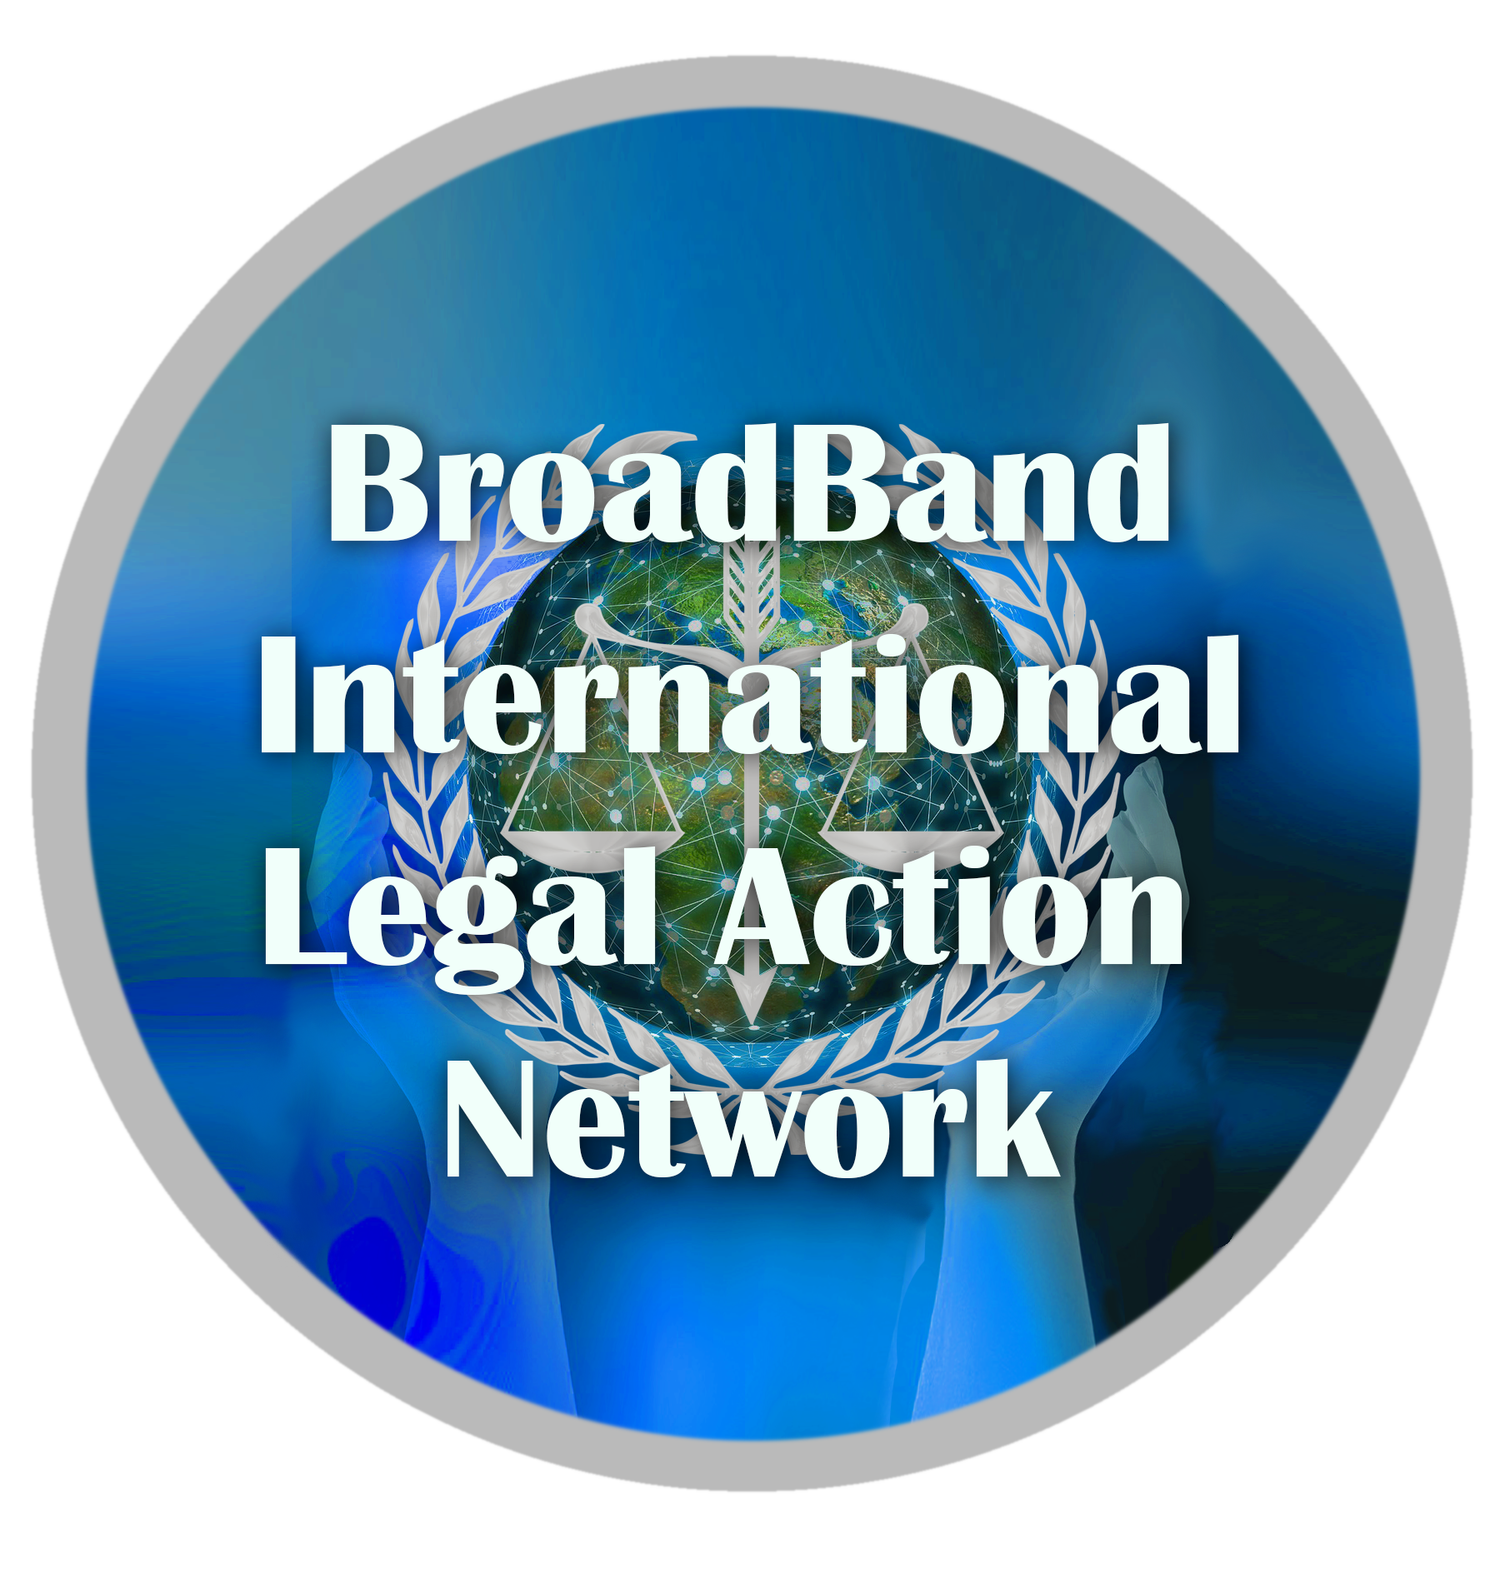 Broadband International Legal Action Network